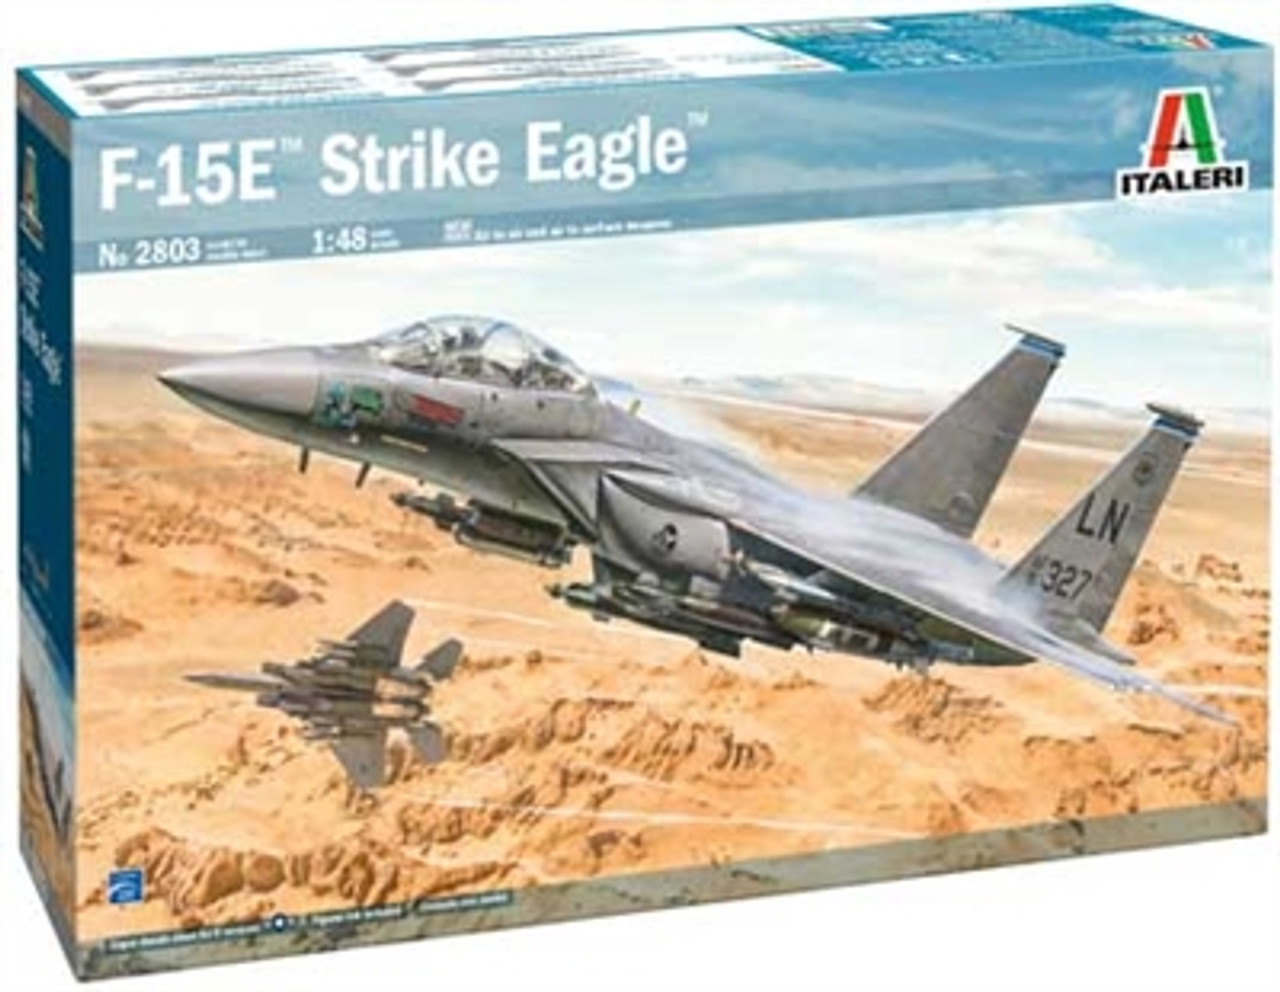 Italeri 2803 1/48 F-15E Strike Eagle Plastic Model Kit